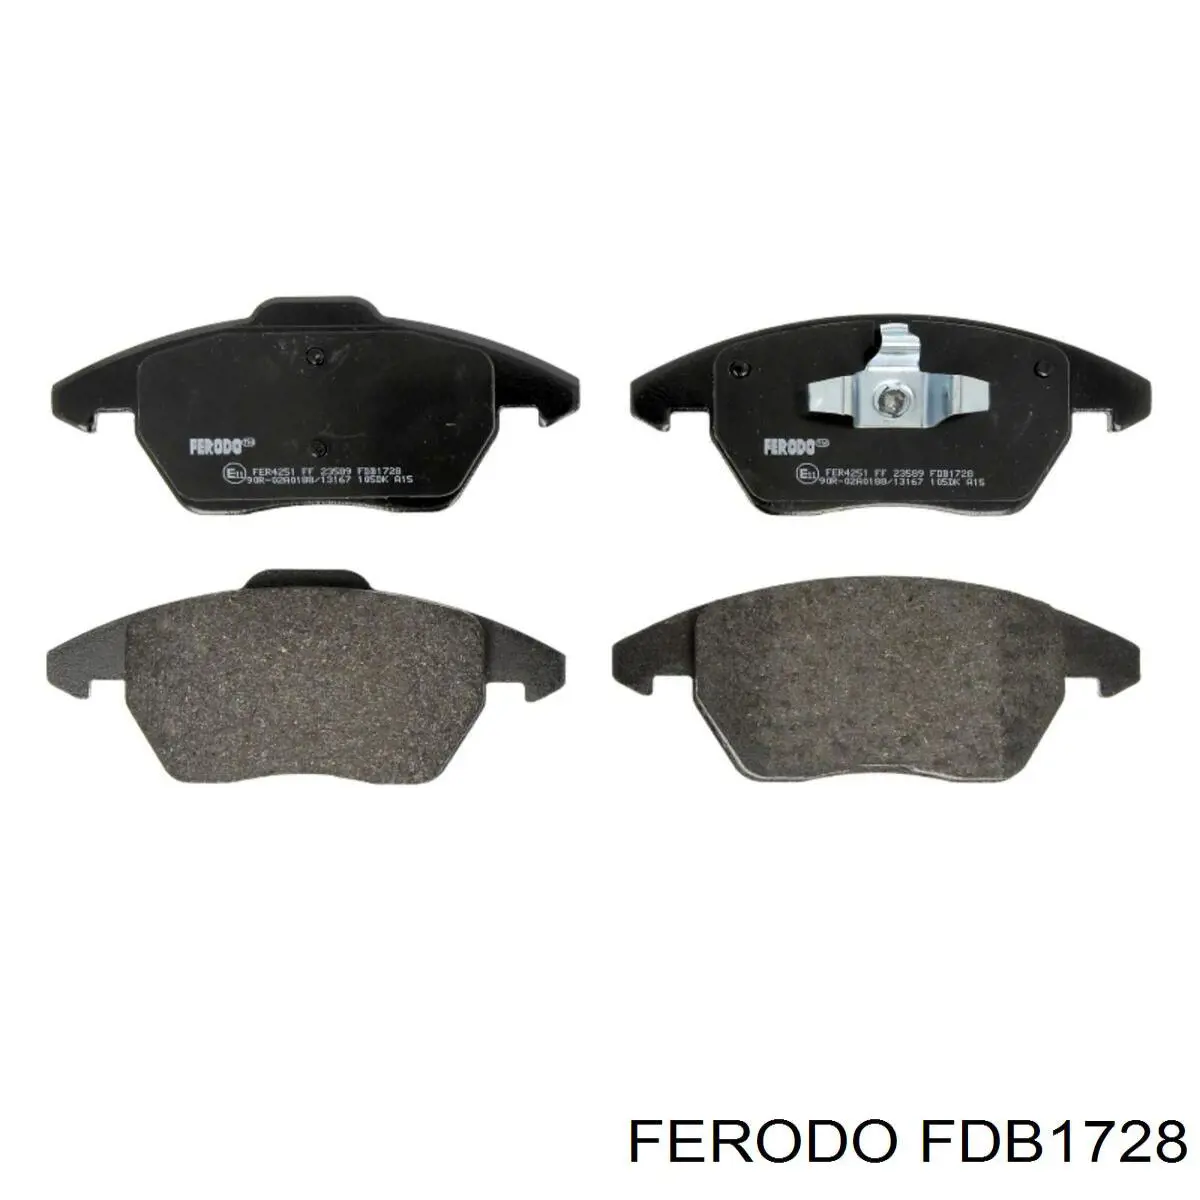 Pastillas de freno delanteras FDB1728 Ferodo